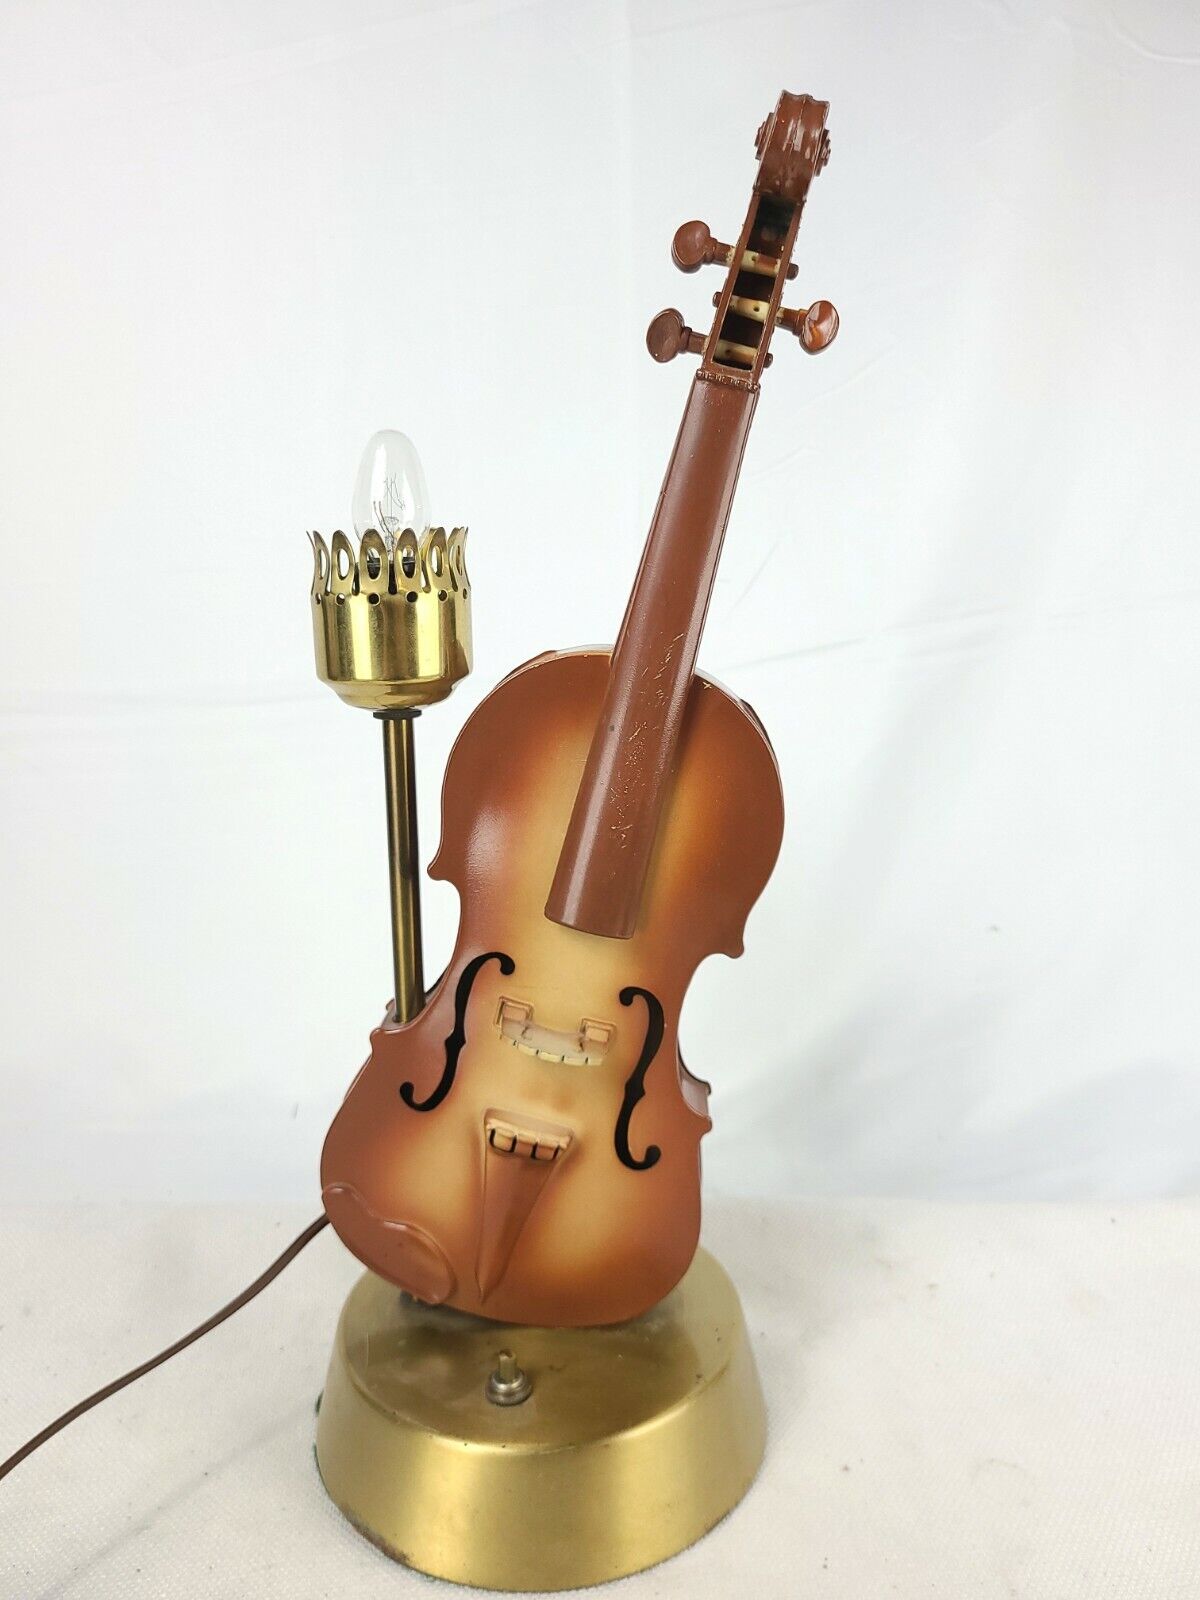 Vintage Violin Table Lamp NO SHADE